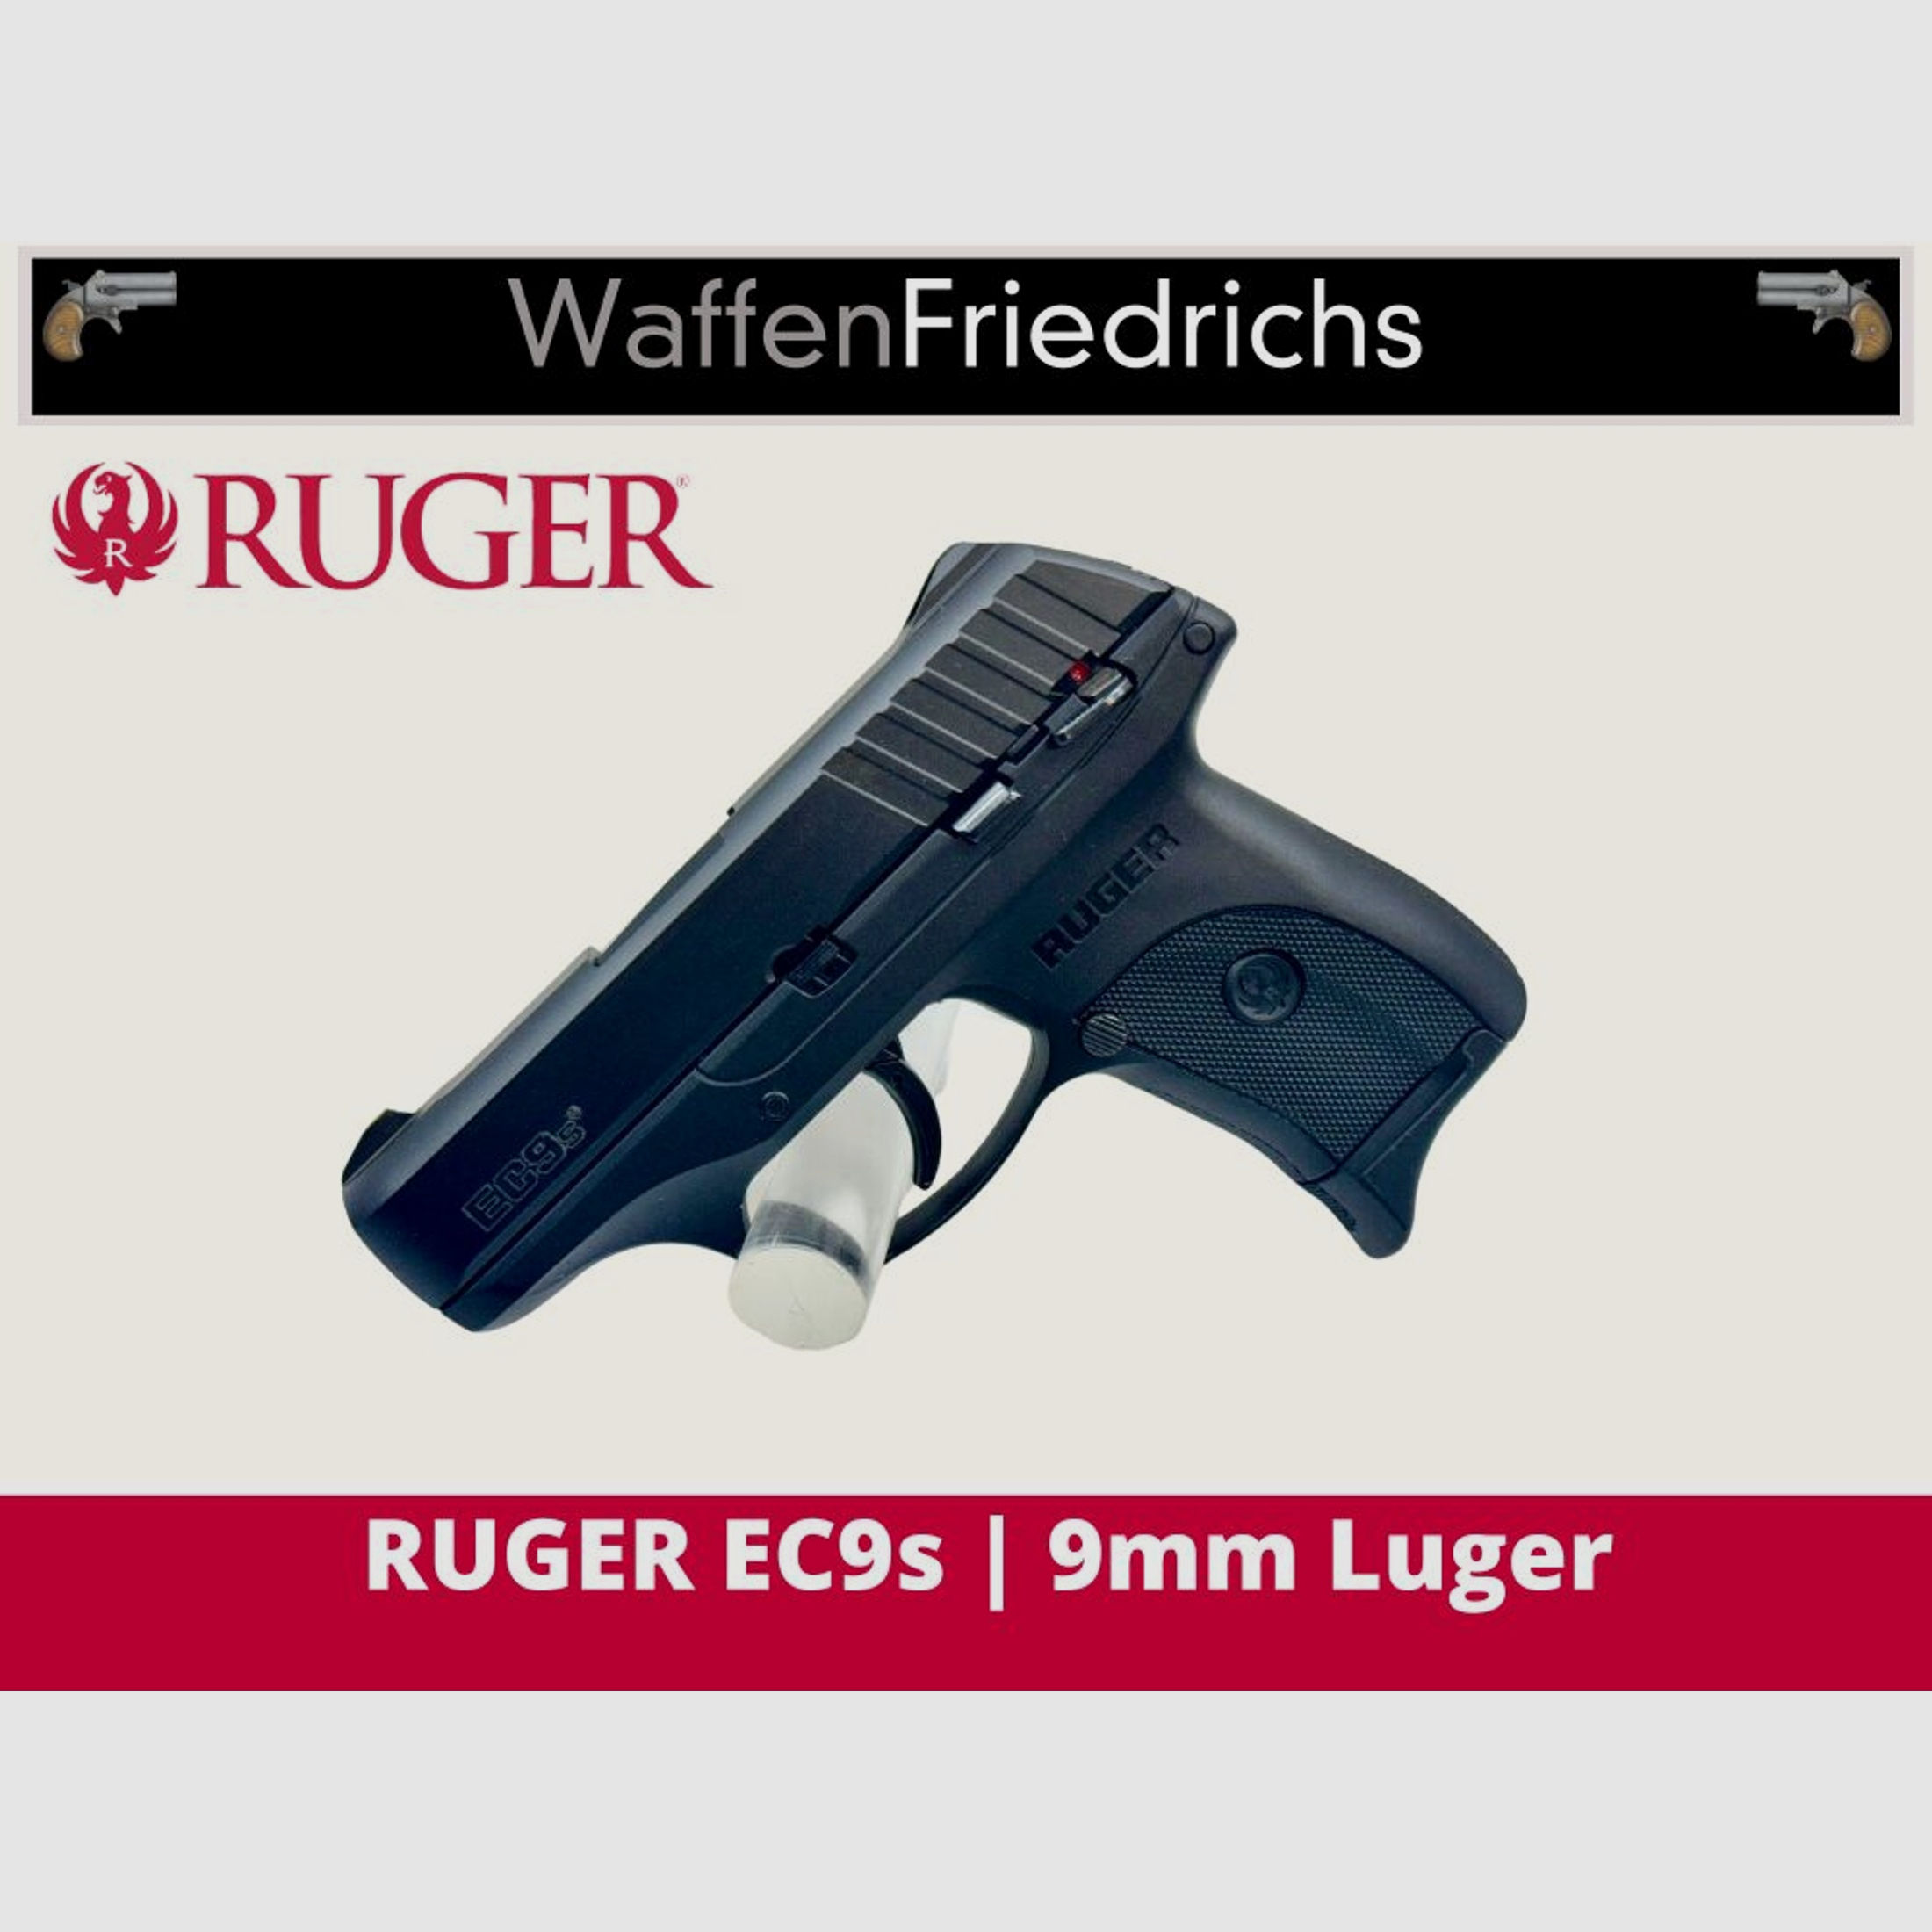 RUGER	 EC9s - Waffen Friedrichs